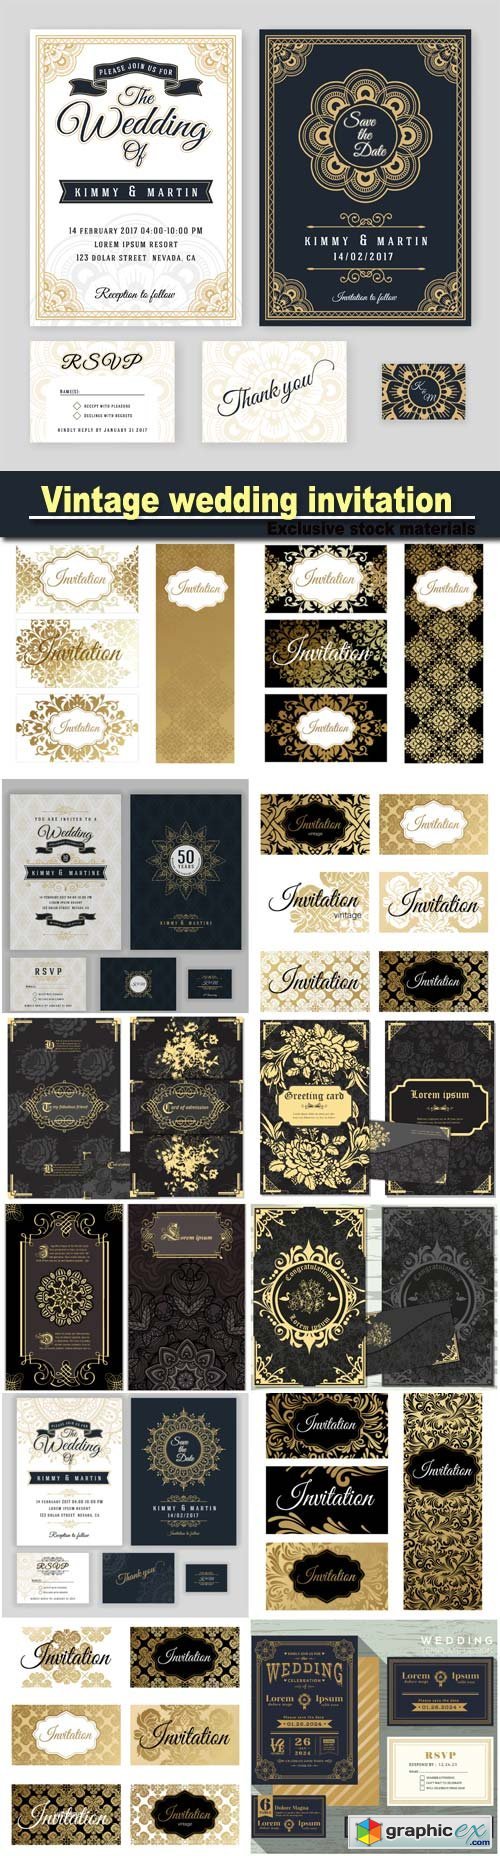 Vintage wedding invitation, design sets include Invitation card